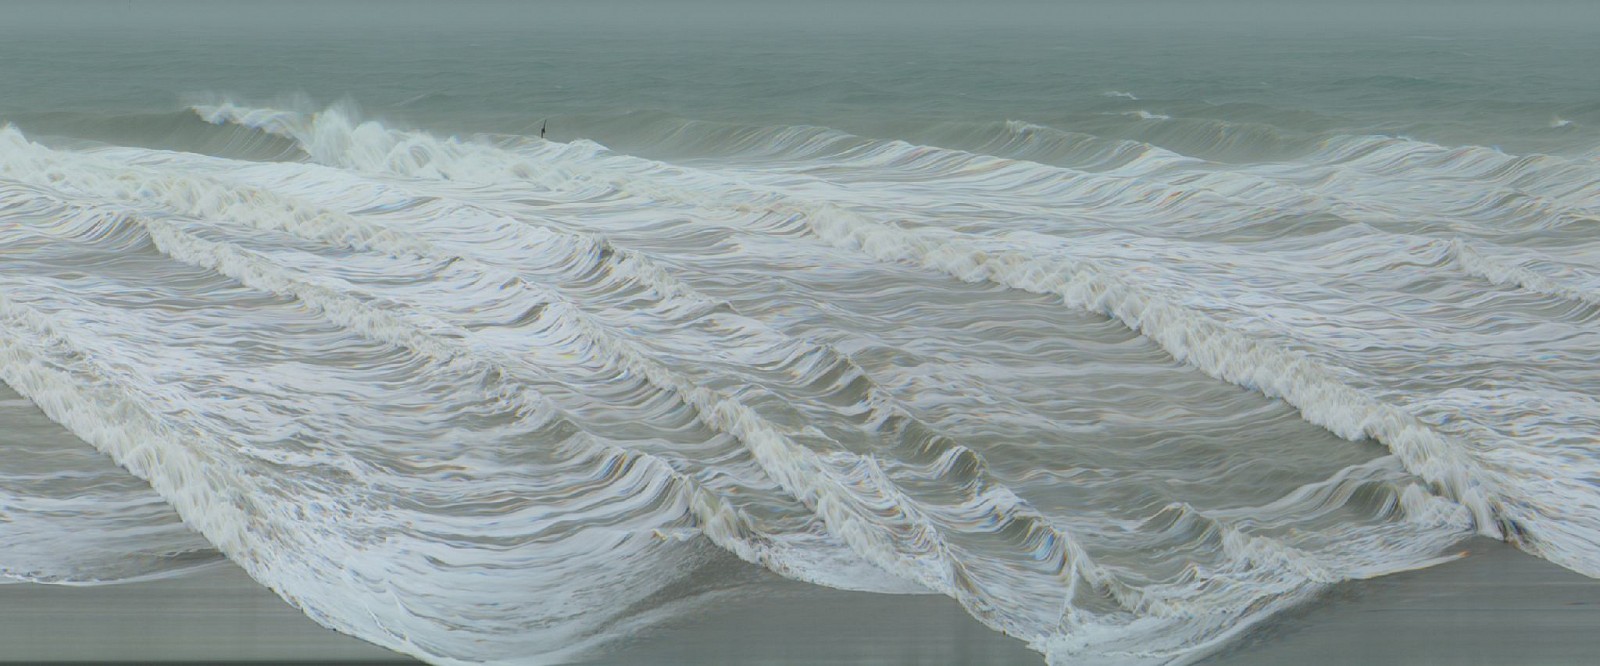 Jay Mark Johnson, STORM AT SEA #10, 2010 Malibu - Ventura CA
archival pigment on paper, mounted on aluminum, 40 x 96 in. (101.6 x 243.8 cm)